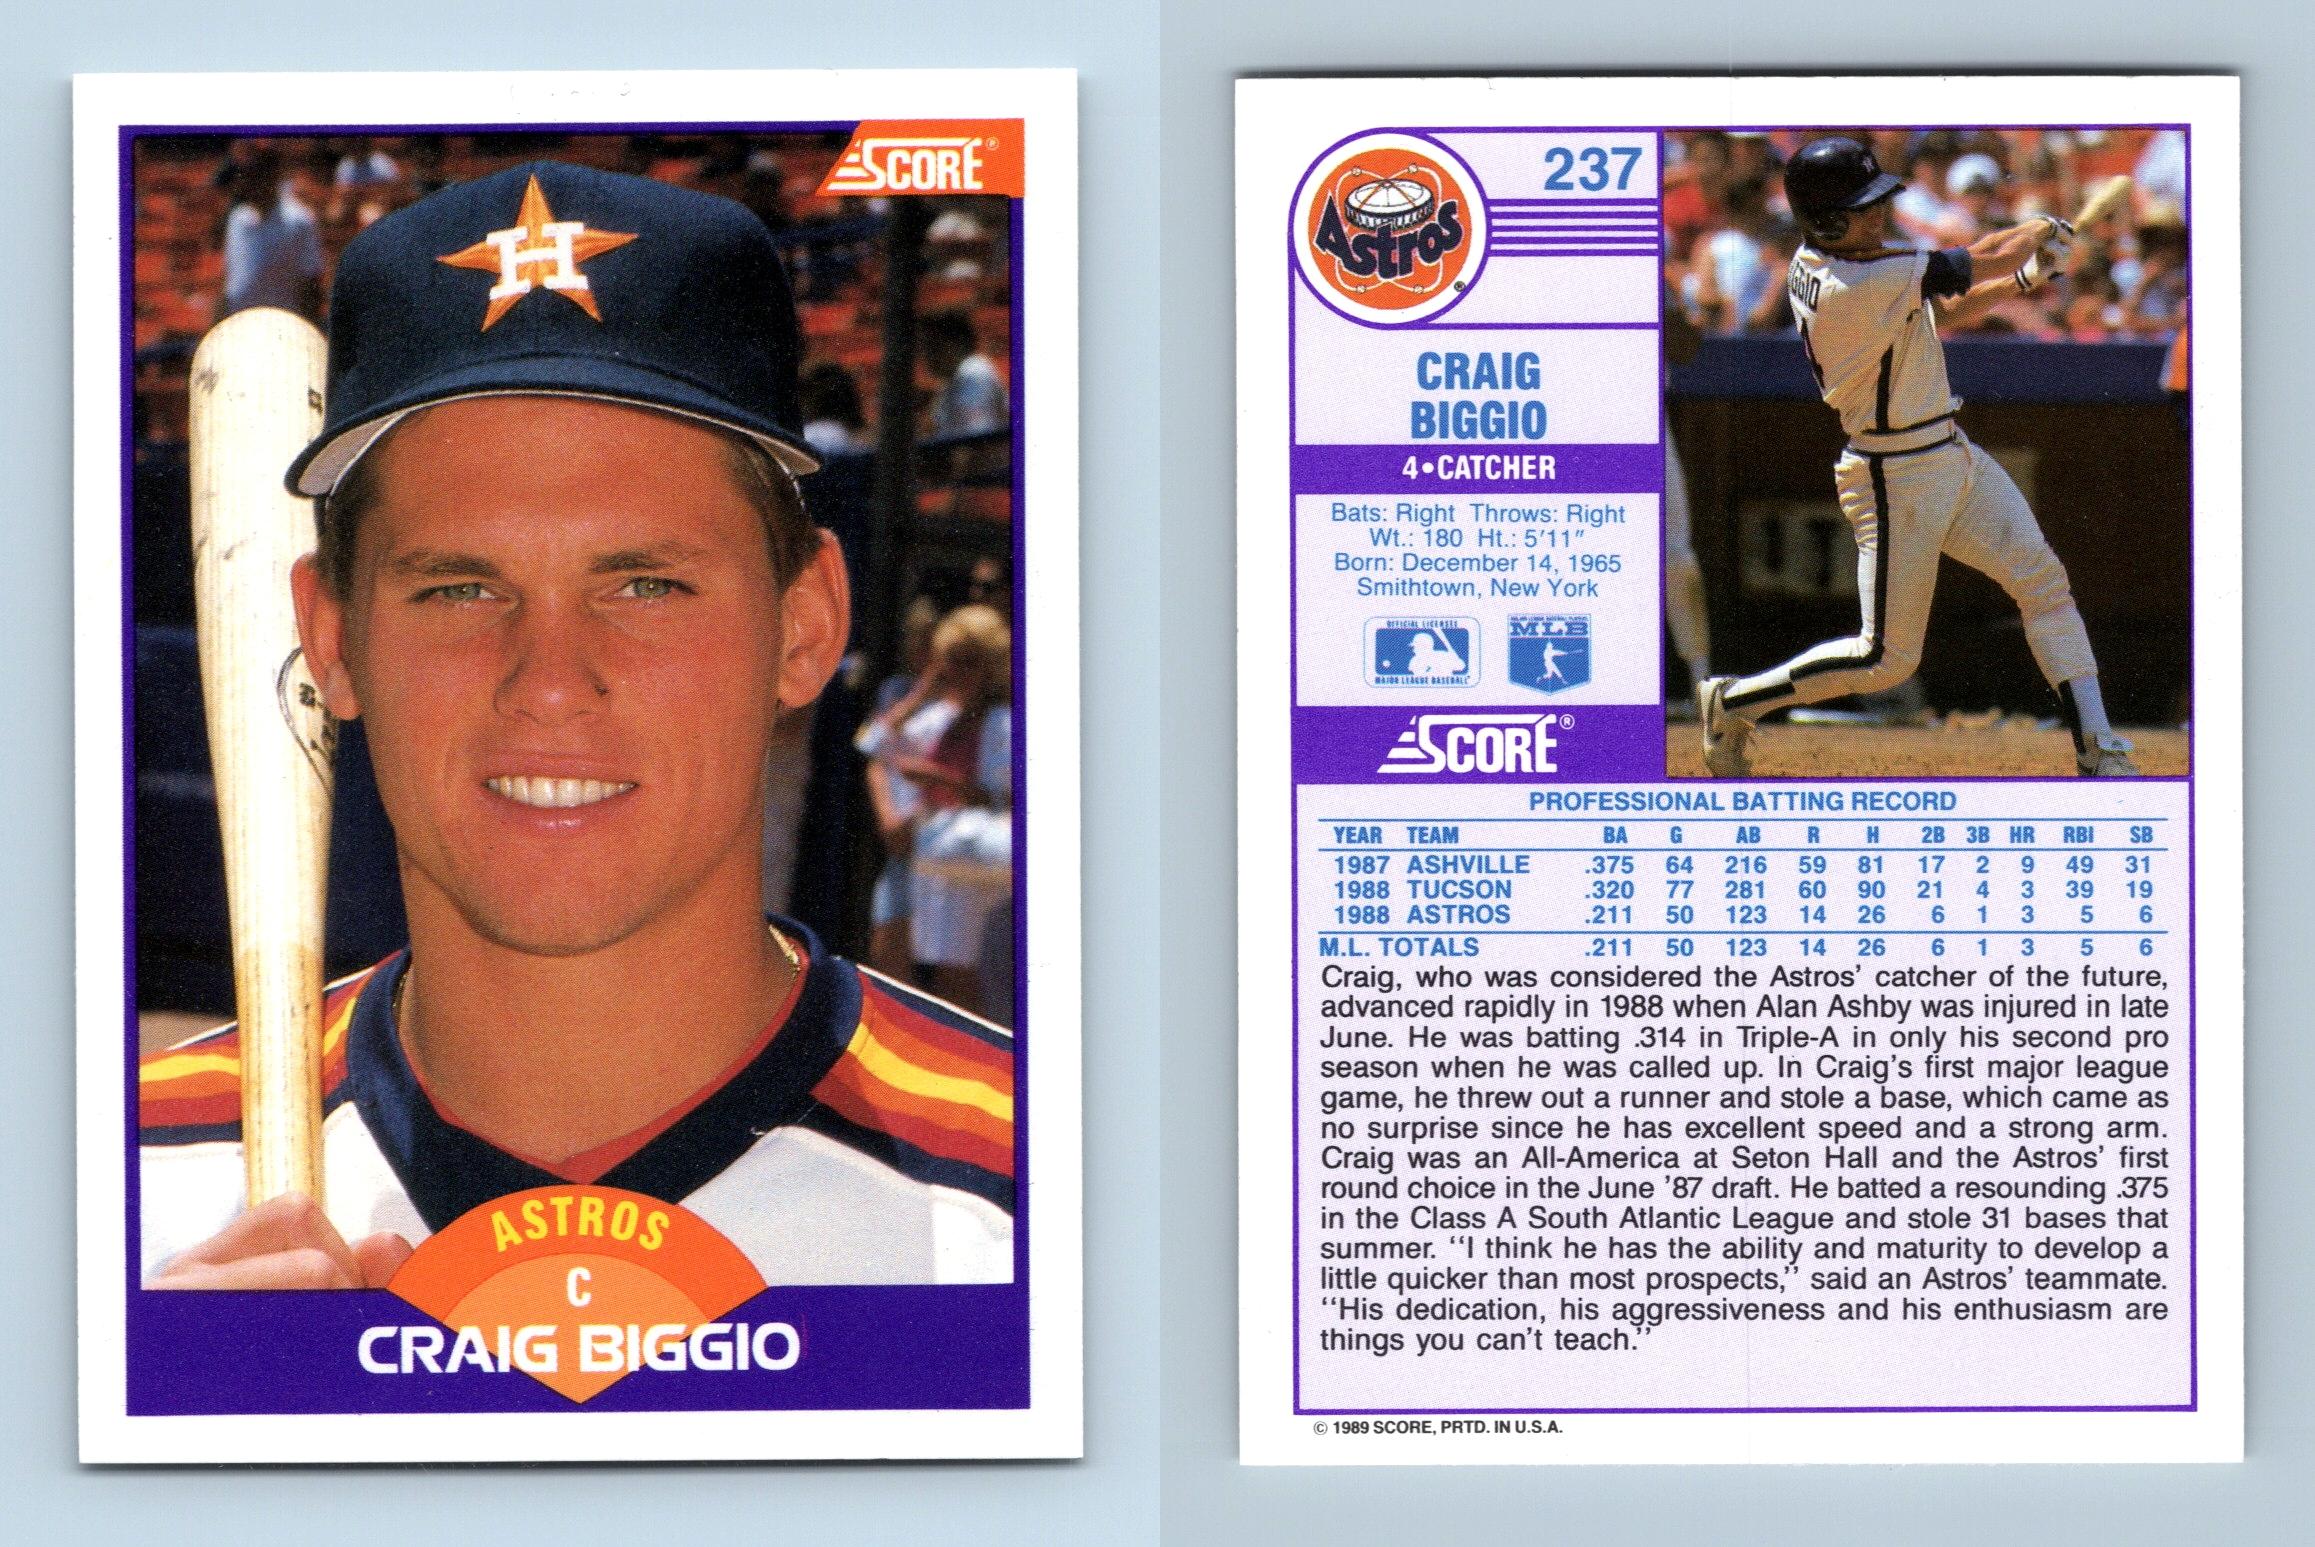  1989 Upper Deck # 622 Mark Grant San Diego Padres